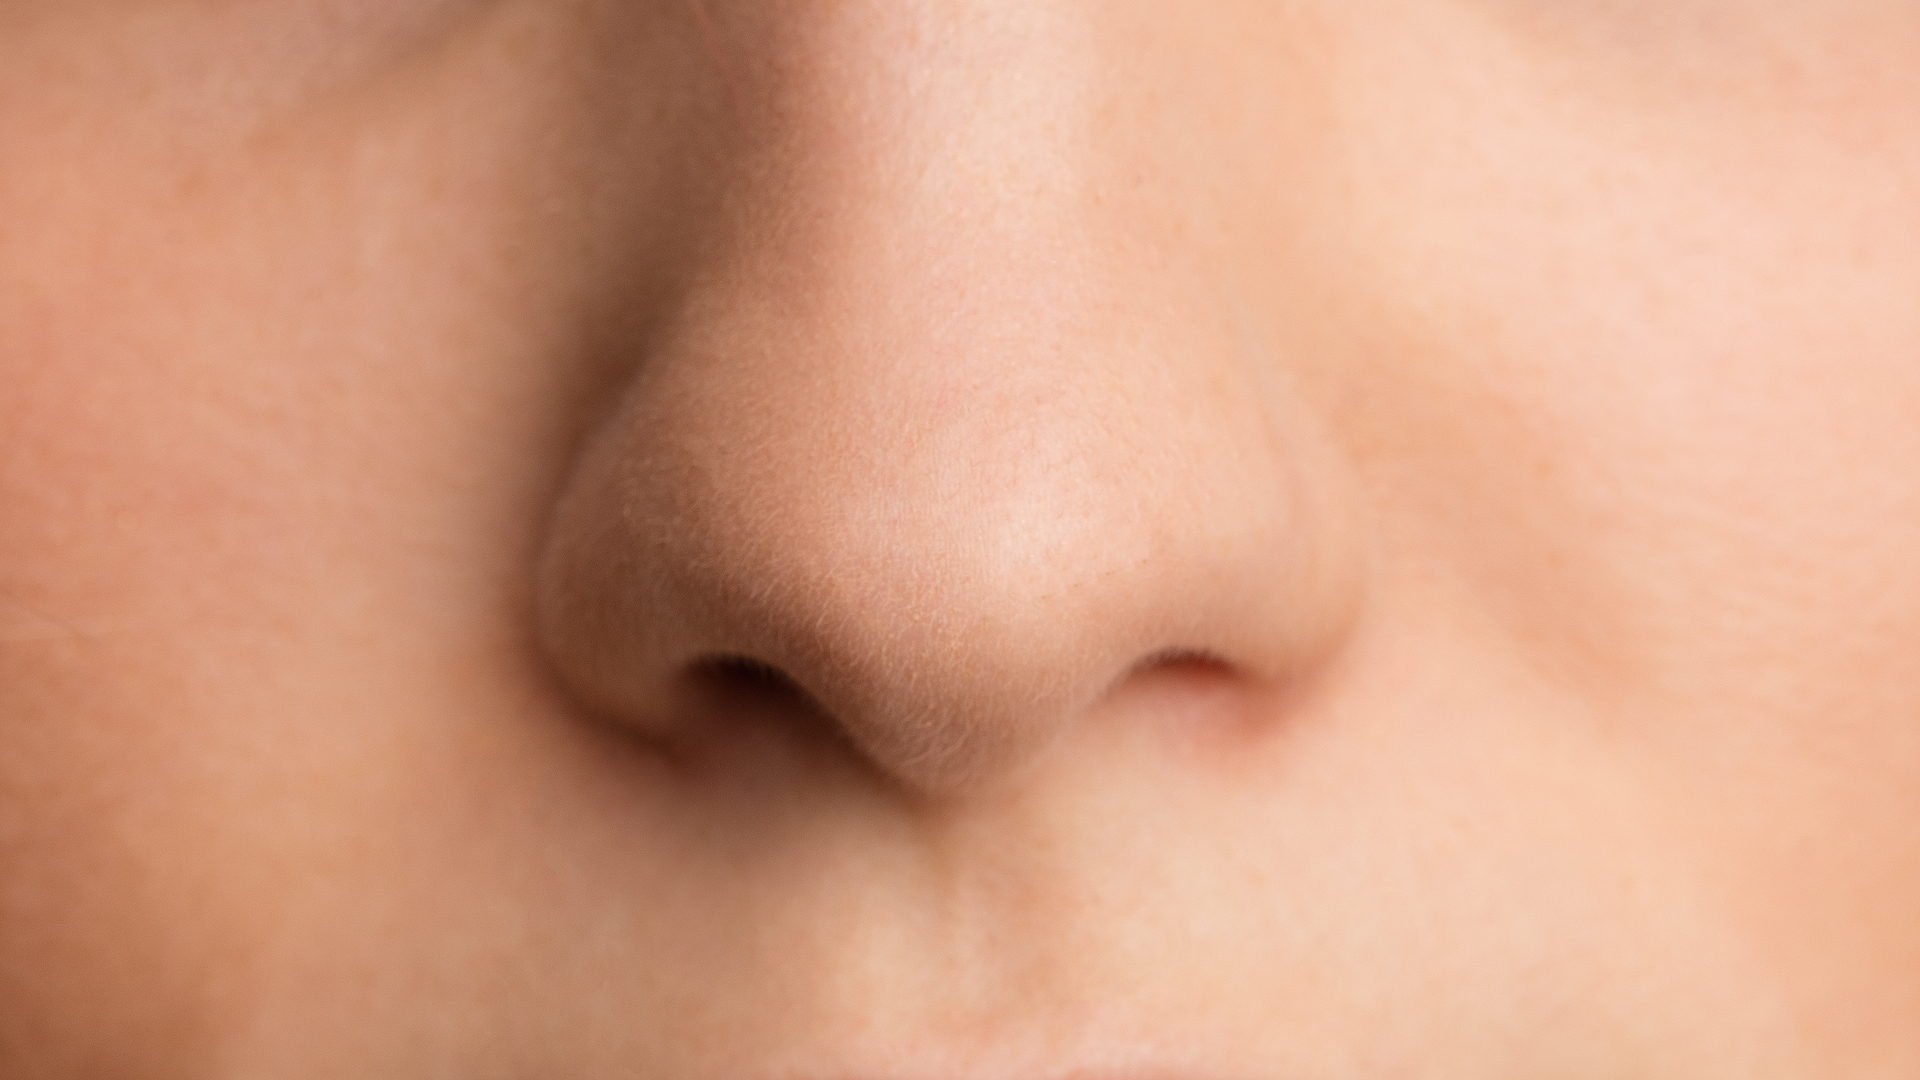 A close-up of a nose